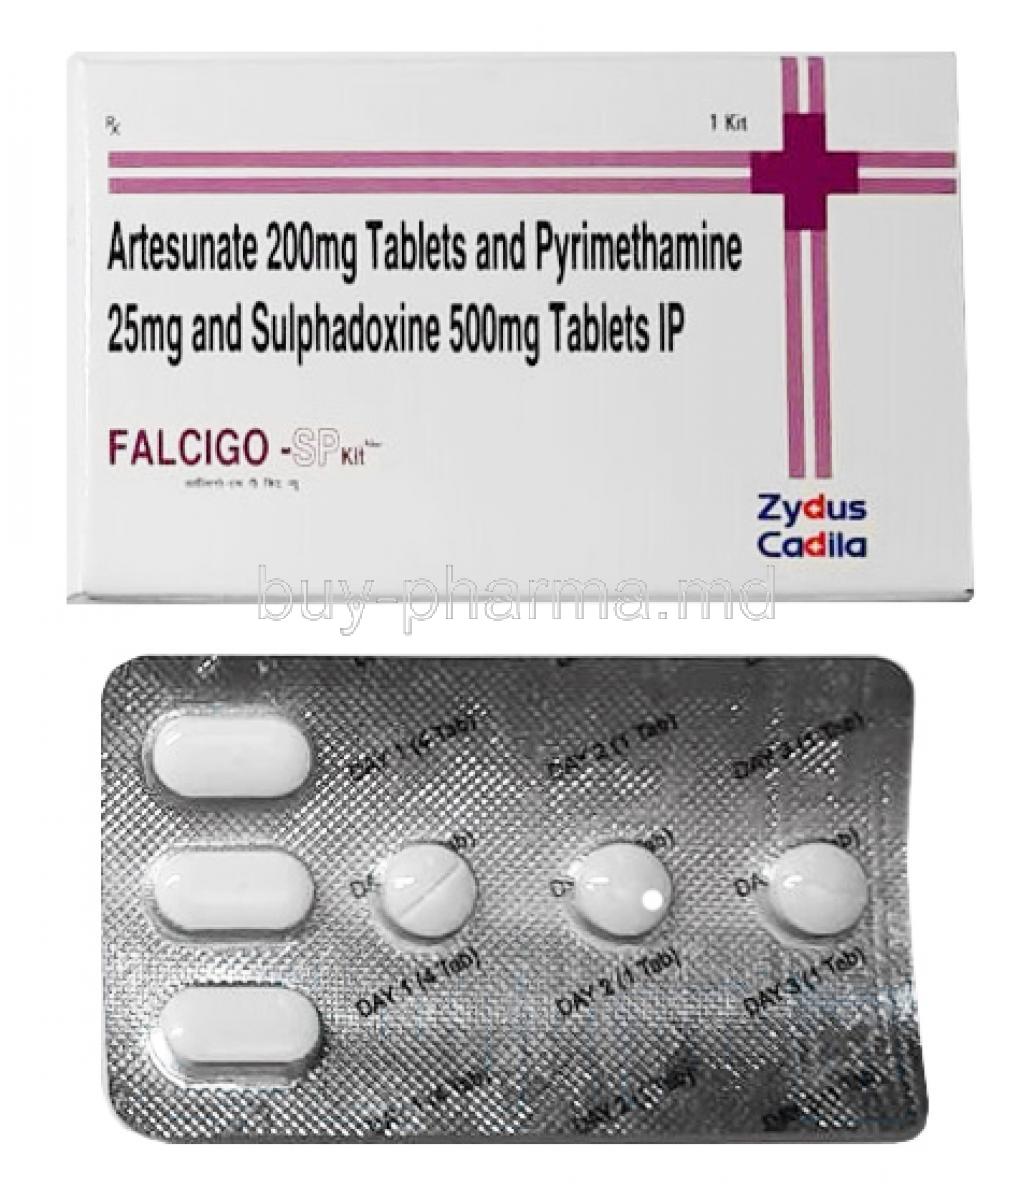 Falcigo-SP Kit, Pyrimethamine and Sulphadoxine box and tablet